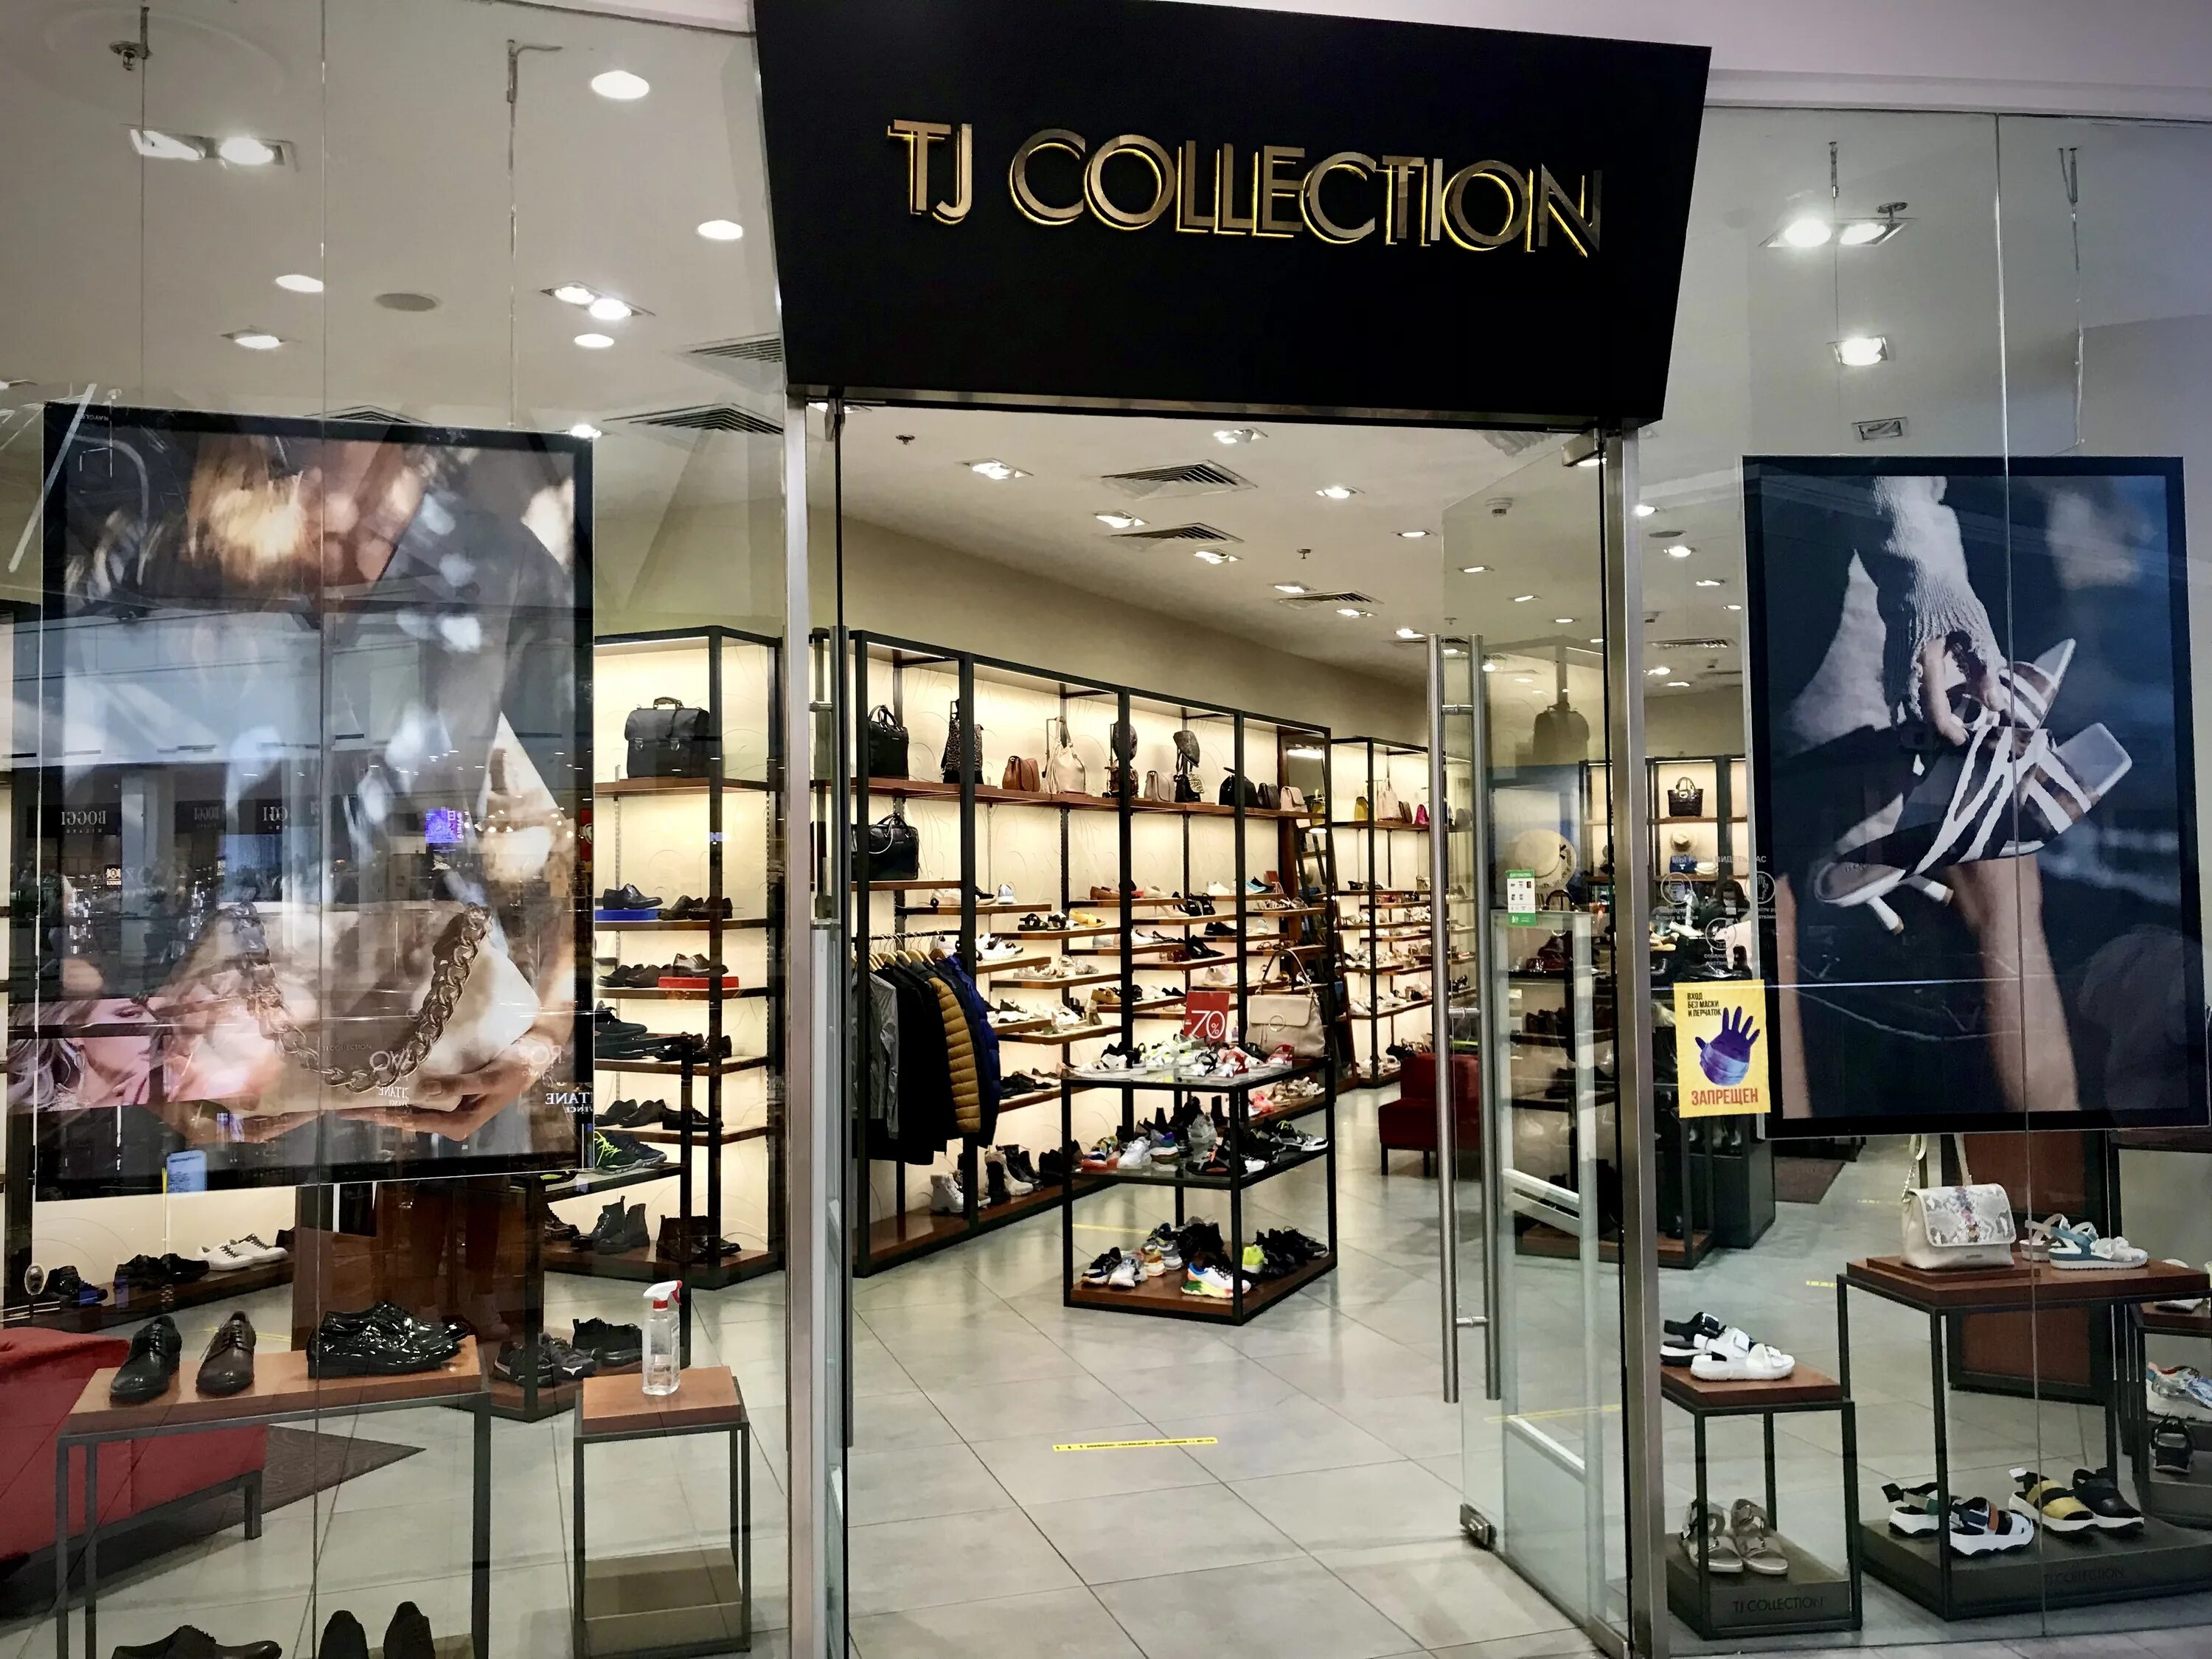 Tj collection адреса. TJ collection магазин. TJ collection магазины в Москве. TJ collection бутик. Атриум TJ collection.